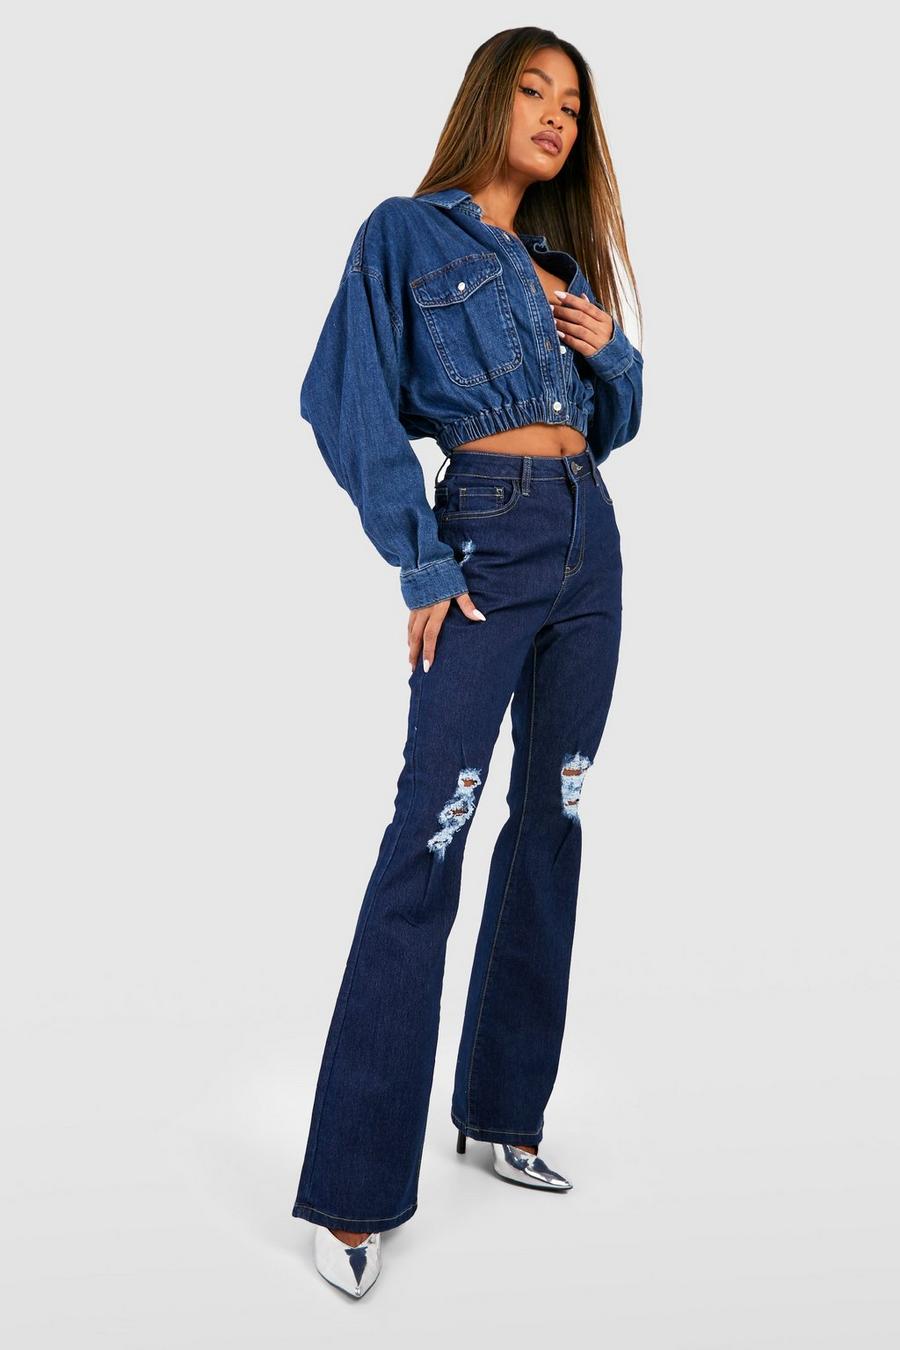 Indigo Basics High Waisted Ripped Skinny Jeans image number 1